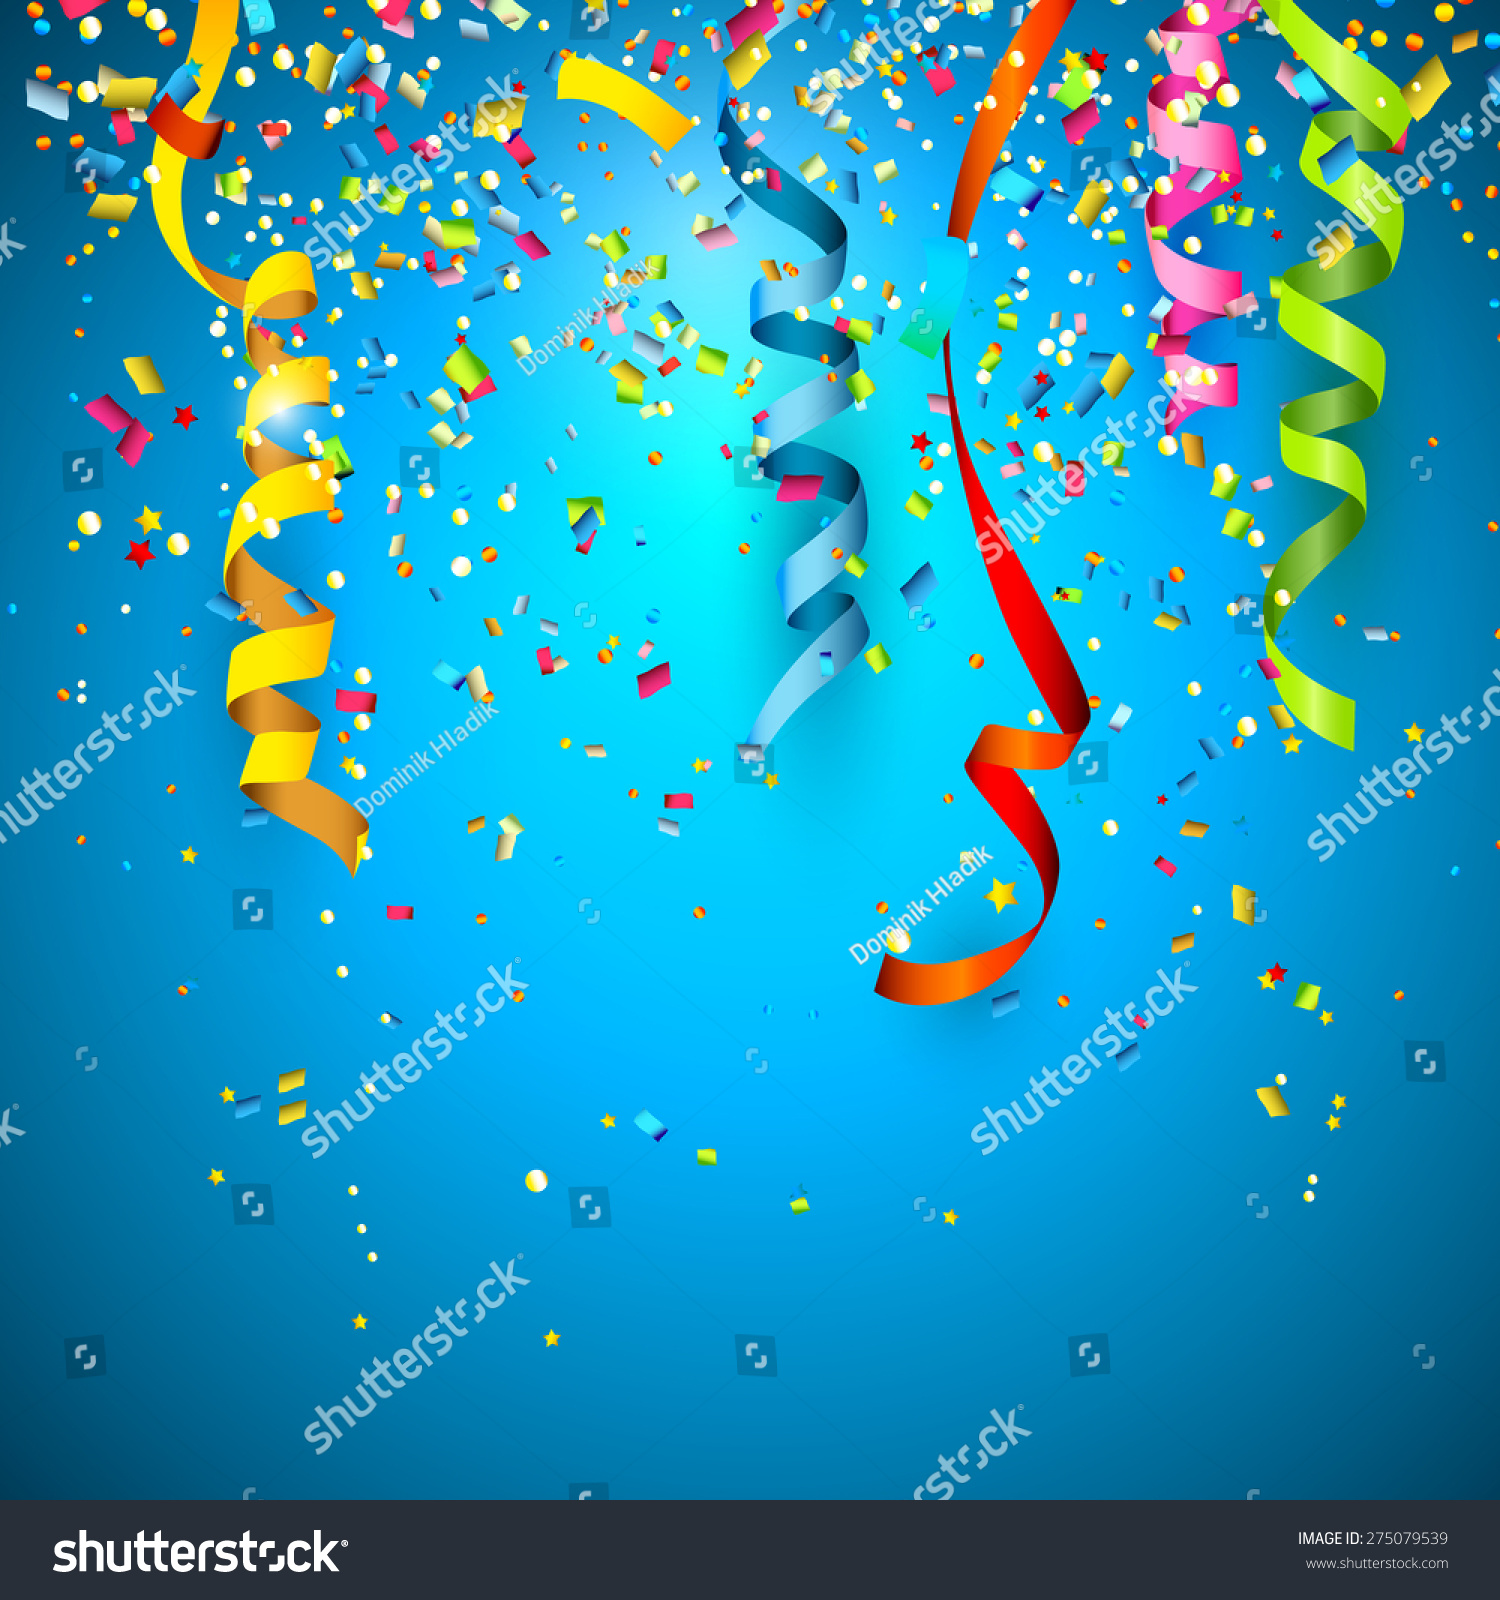 Colorful Confetti On Blue Background Stock Vector 275079539 - Shutterstock